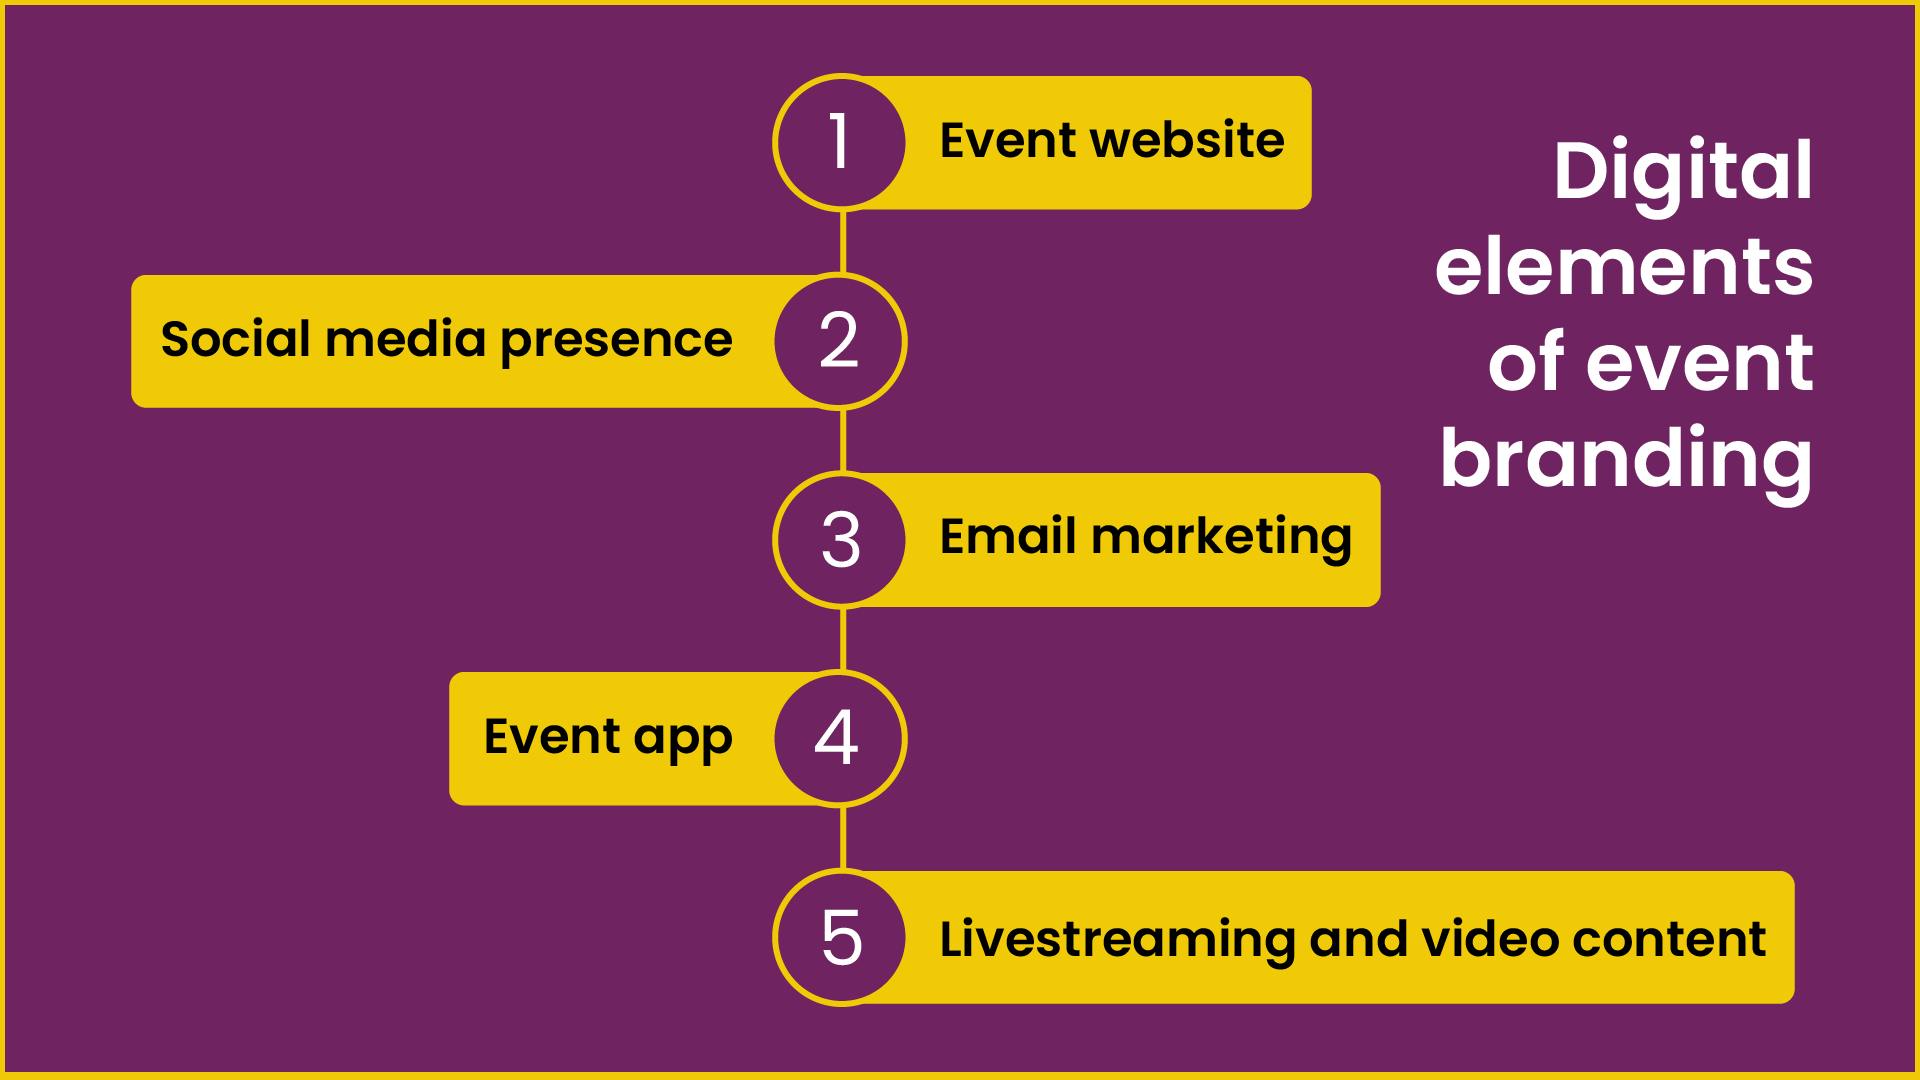 Digital elements of event branding